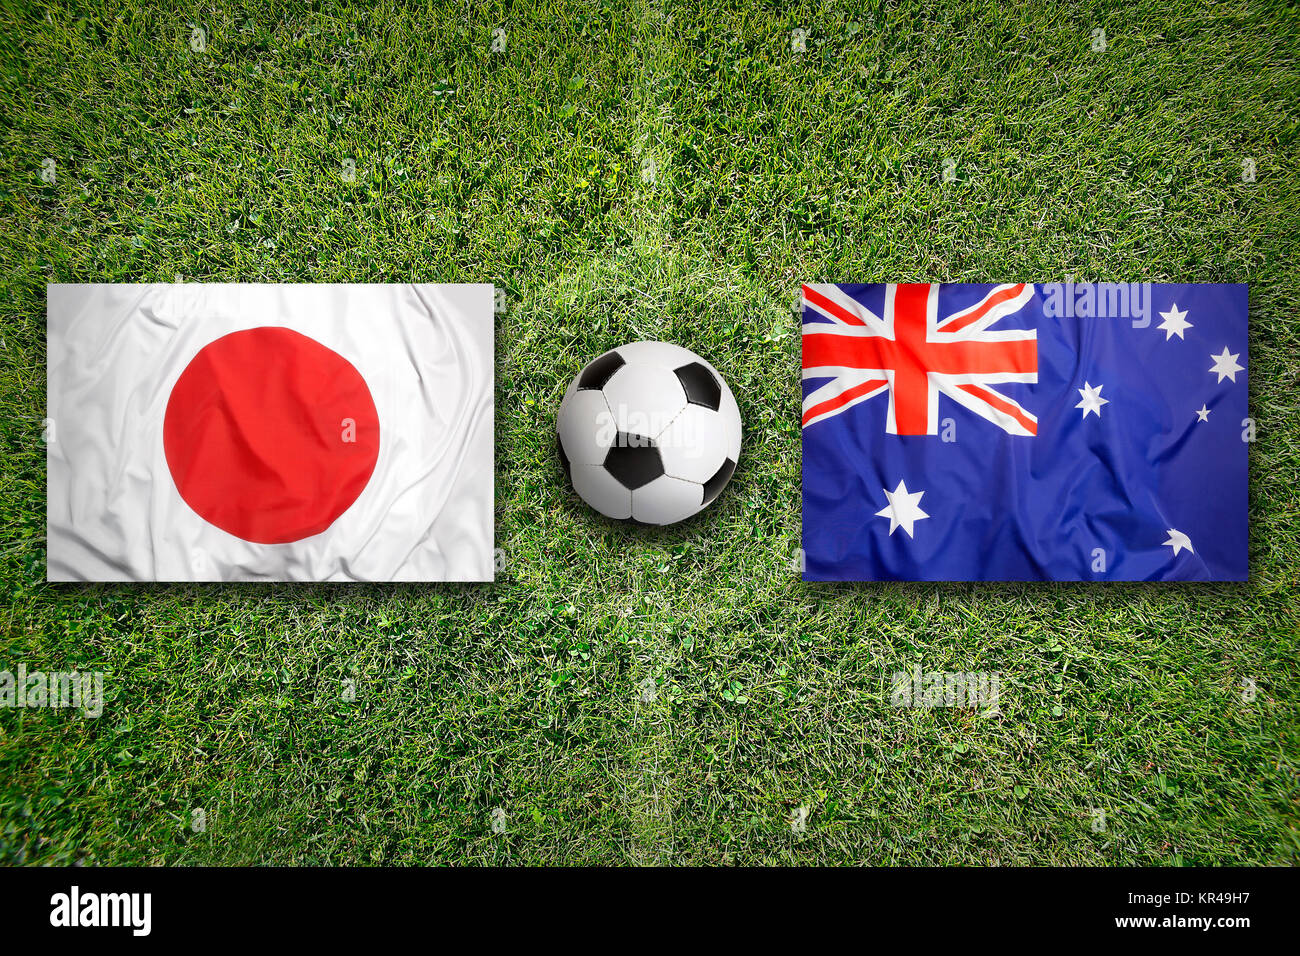 Japan gegen Australien Flaggen auf Fußball-Feld Stockfotografie - Alamy